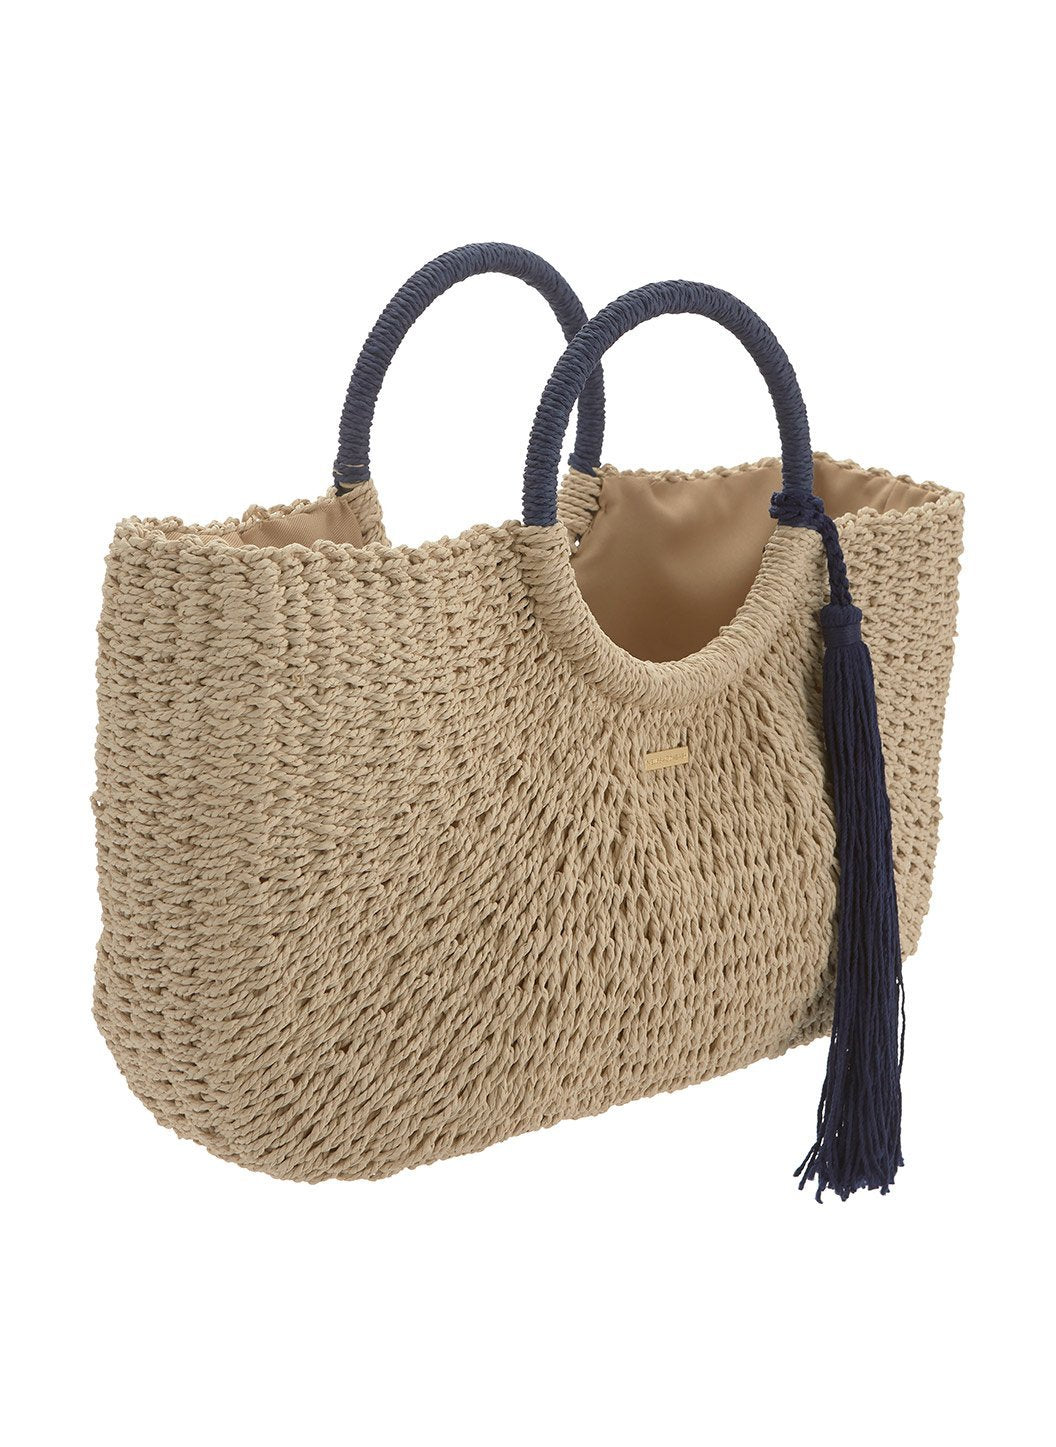 sorrento woven basket bag natural navy 2019 2